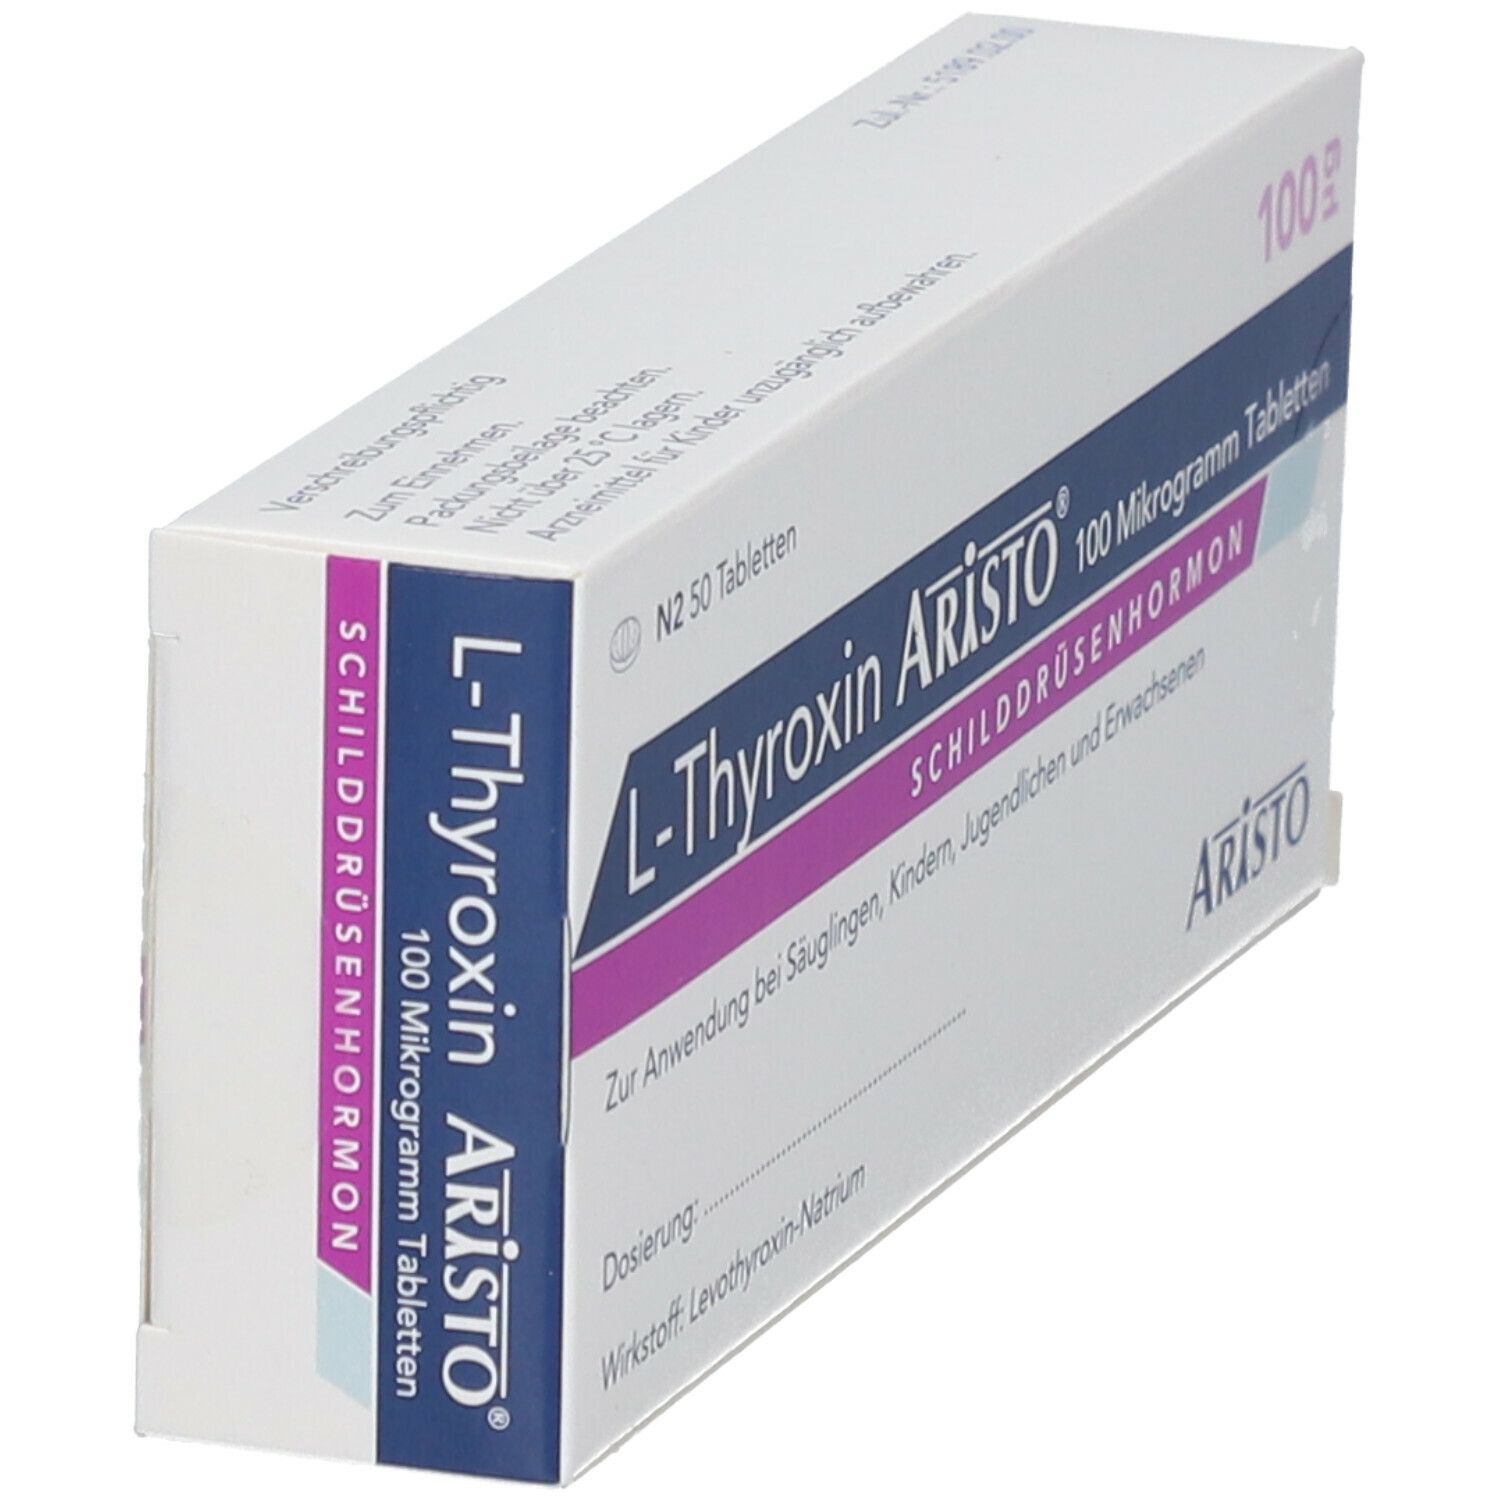 L-Thyroxin Aristo® 100 mg